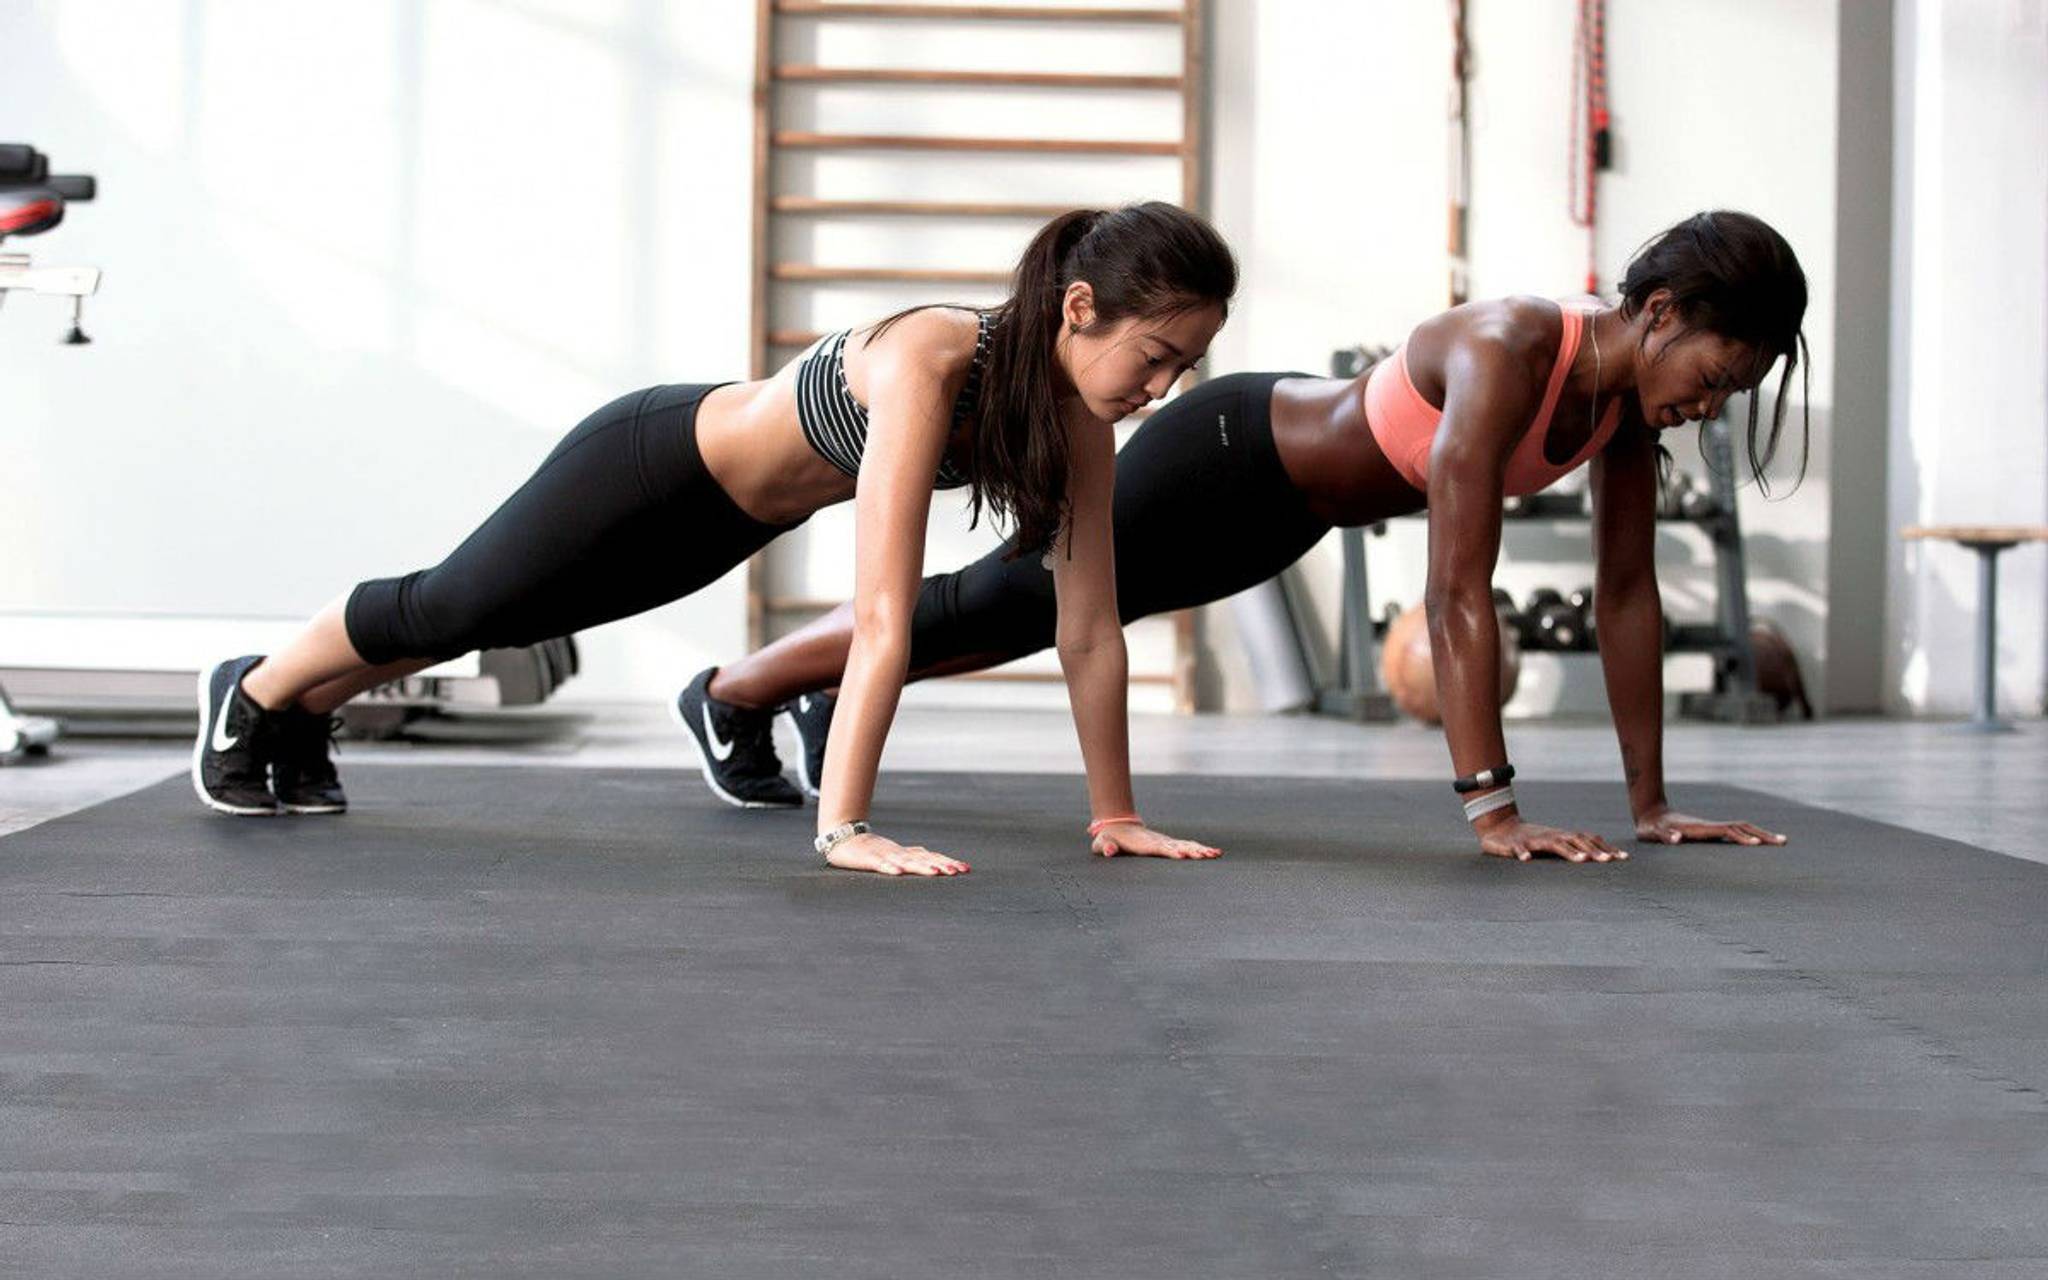 Nike invites women to its VIP fitness studio